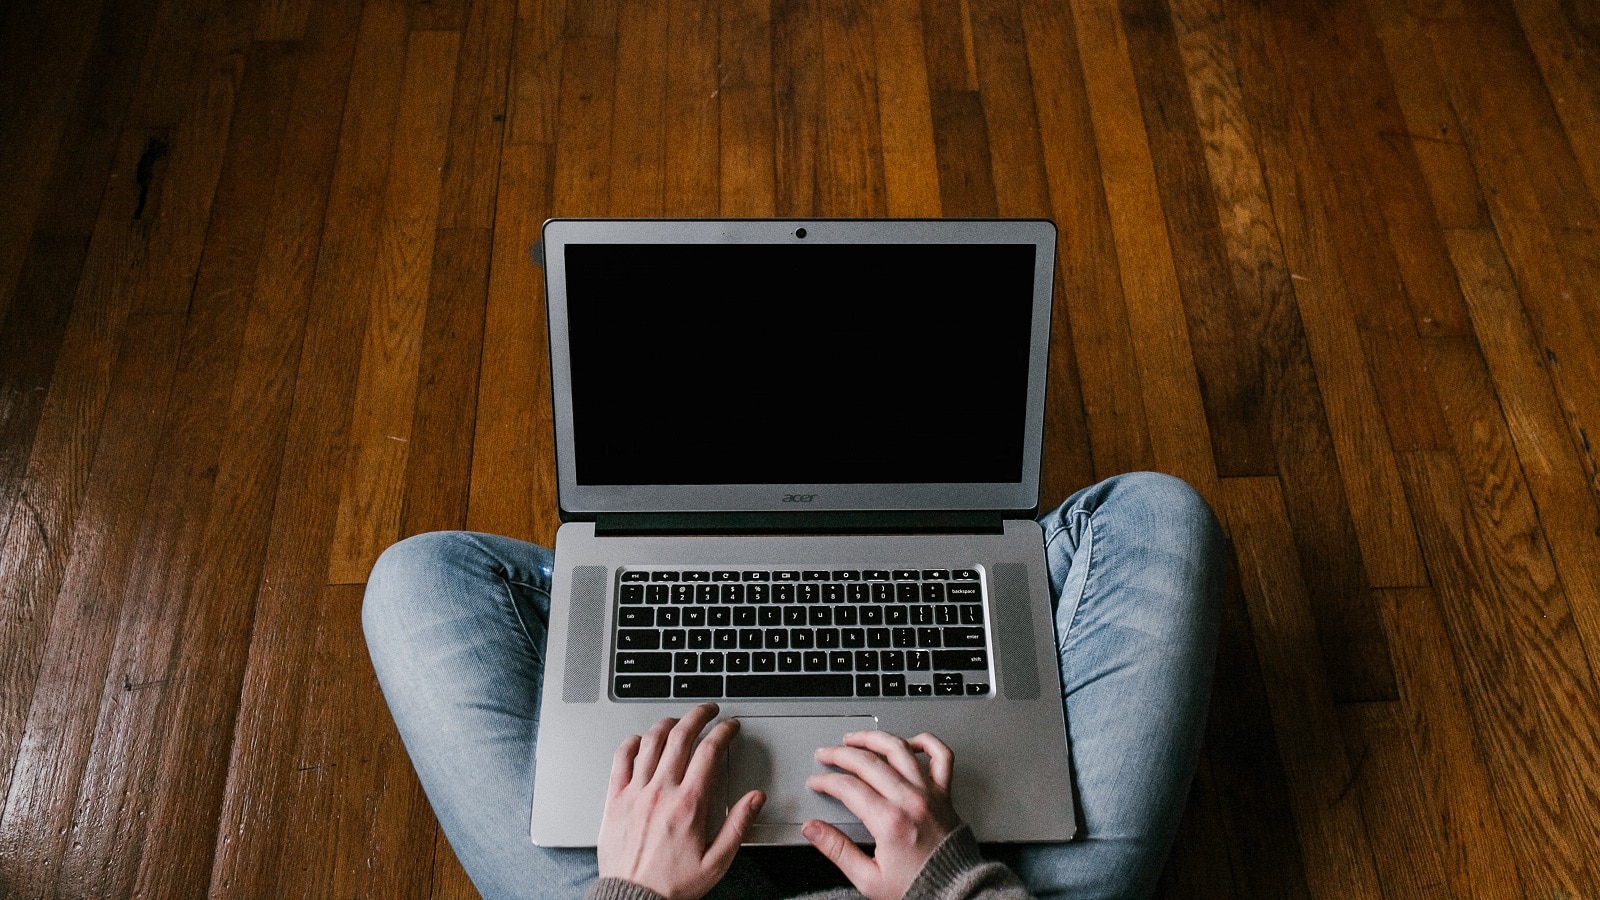 Man sitting cross-legged on hardwood floor, hands on laptop typing